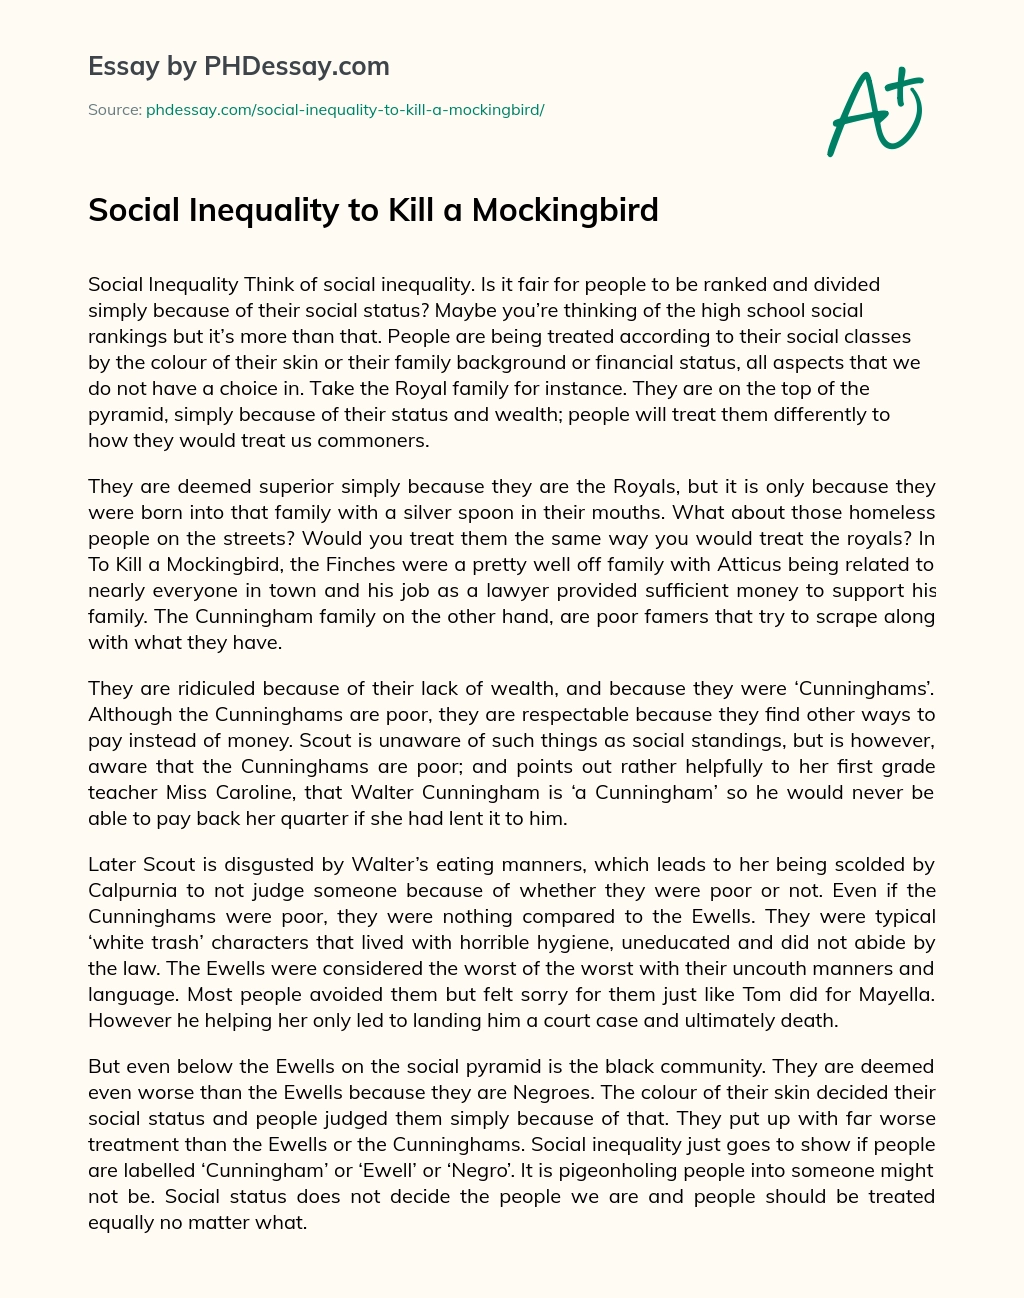 social inequality to kill a mockingbird